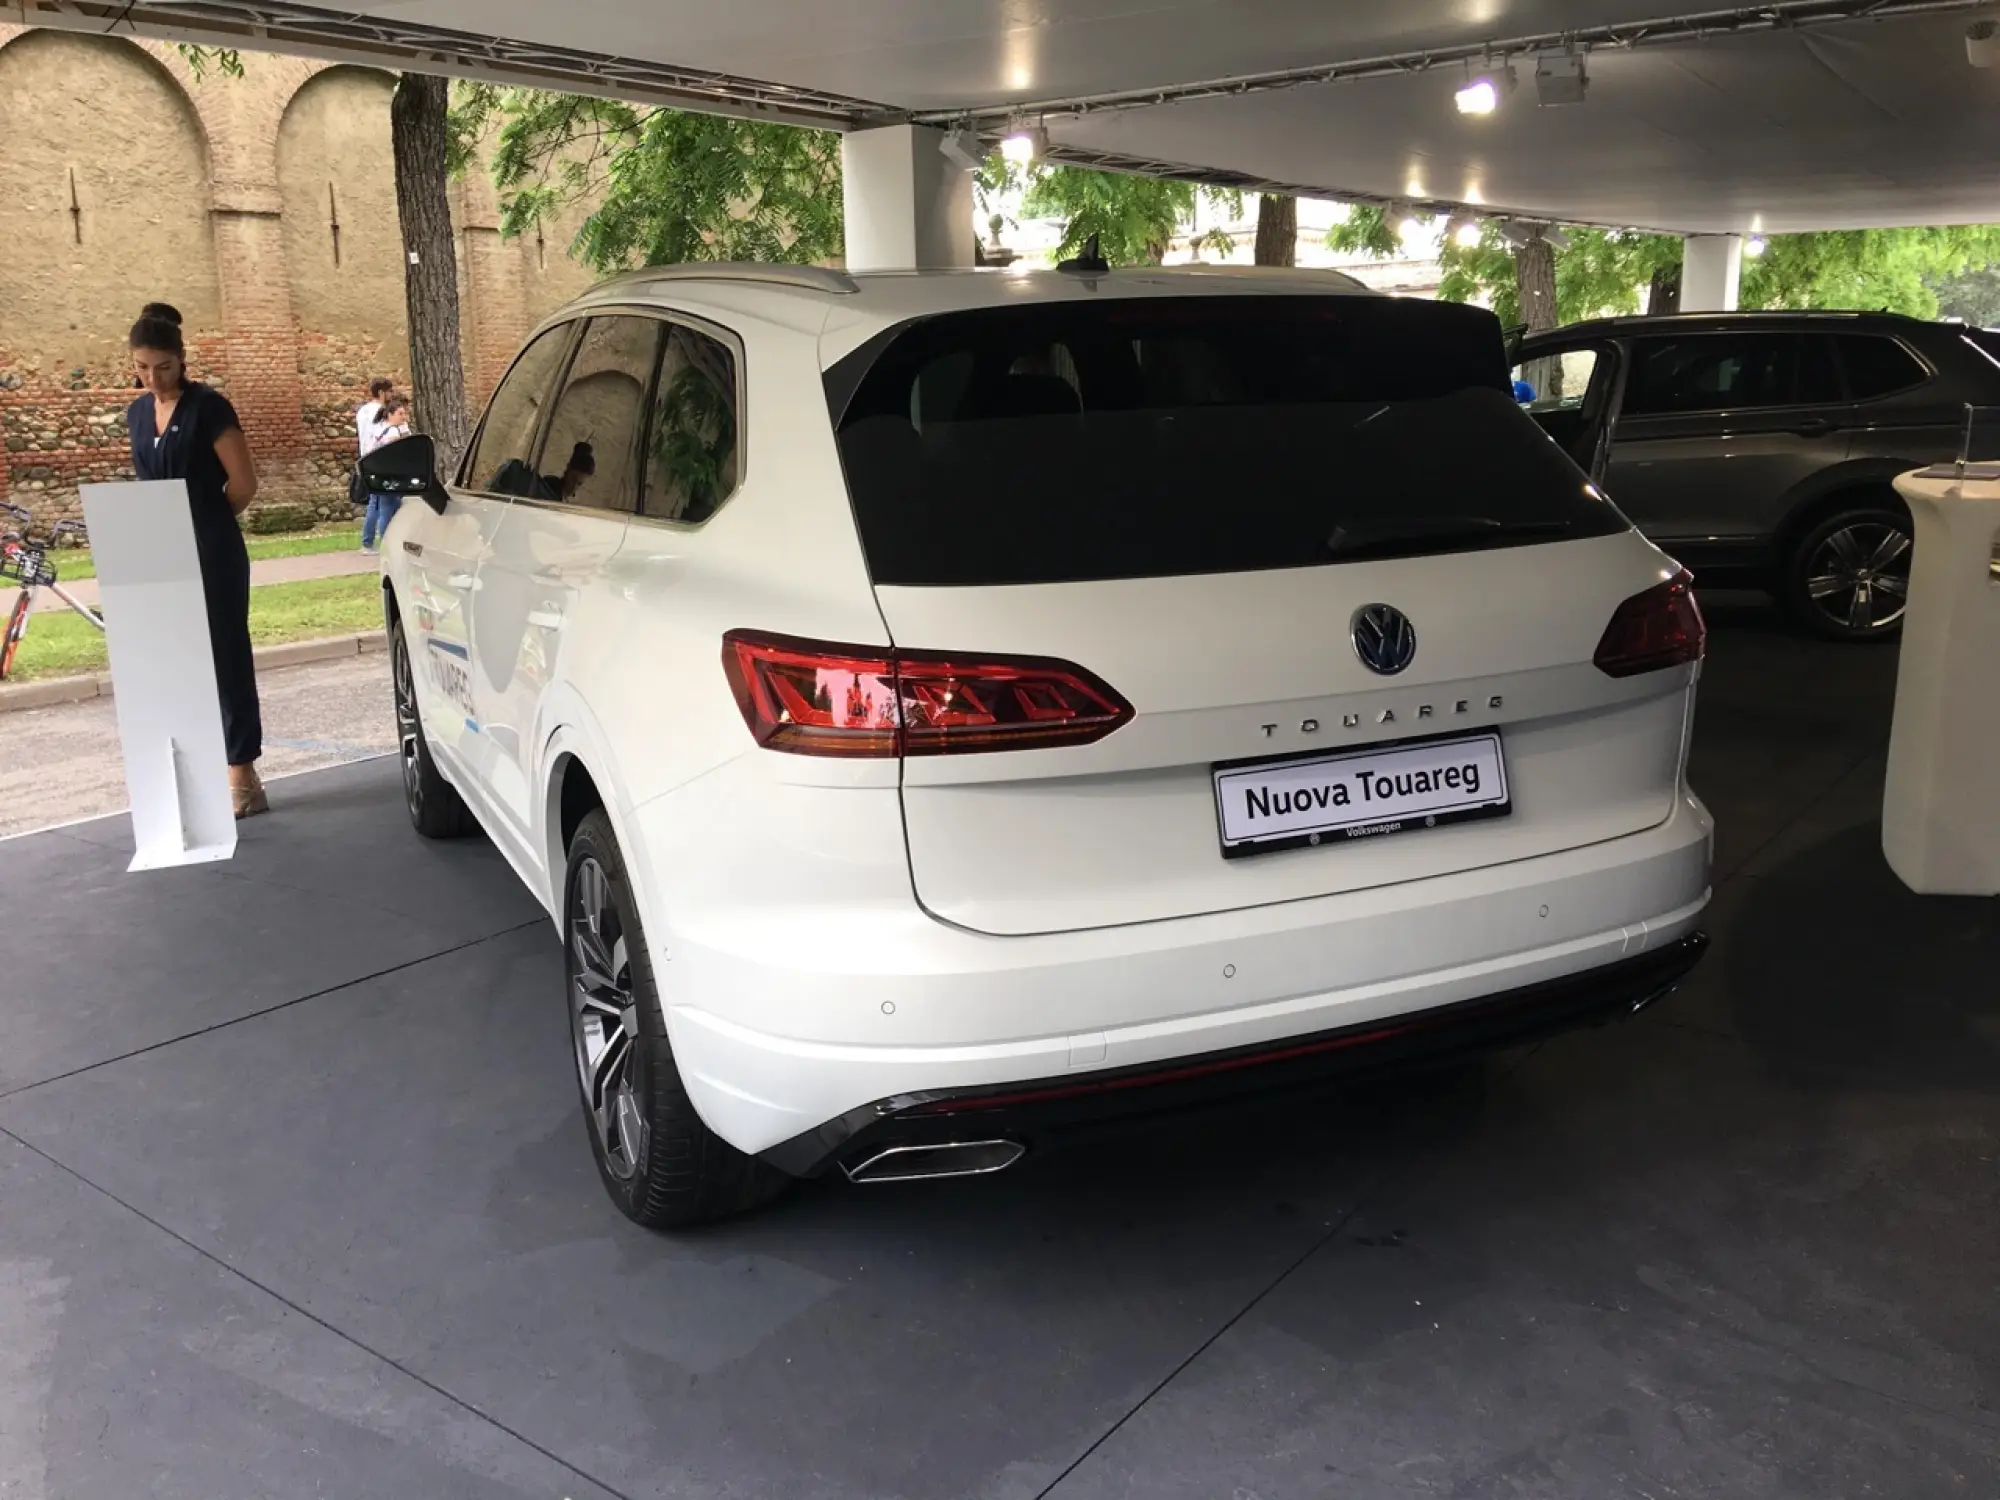 Volkswagen Touareg - Parco Valentino 2018 - 2